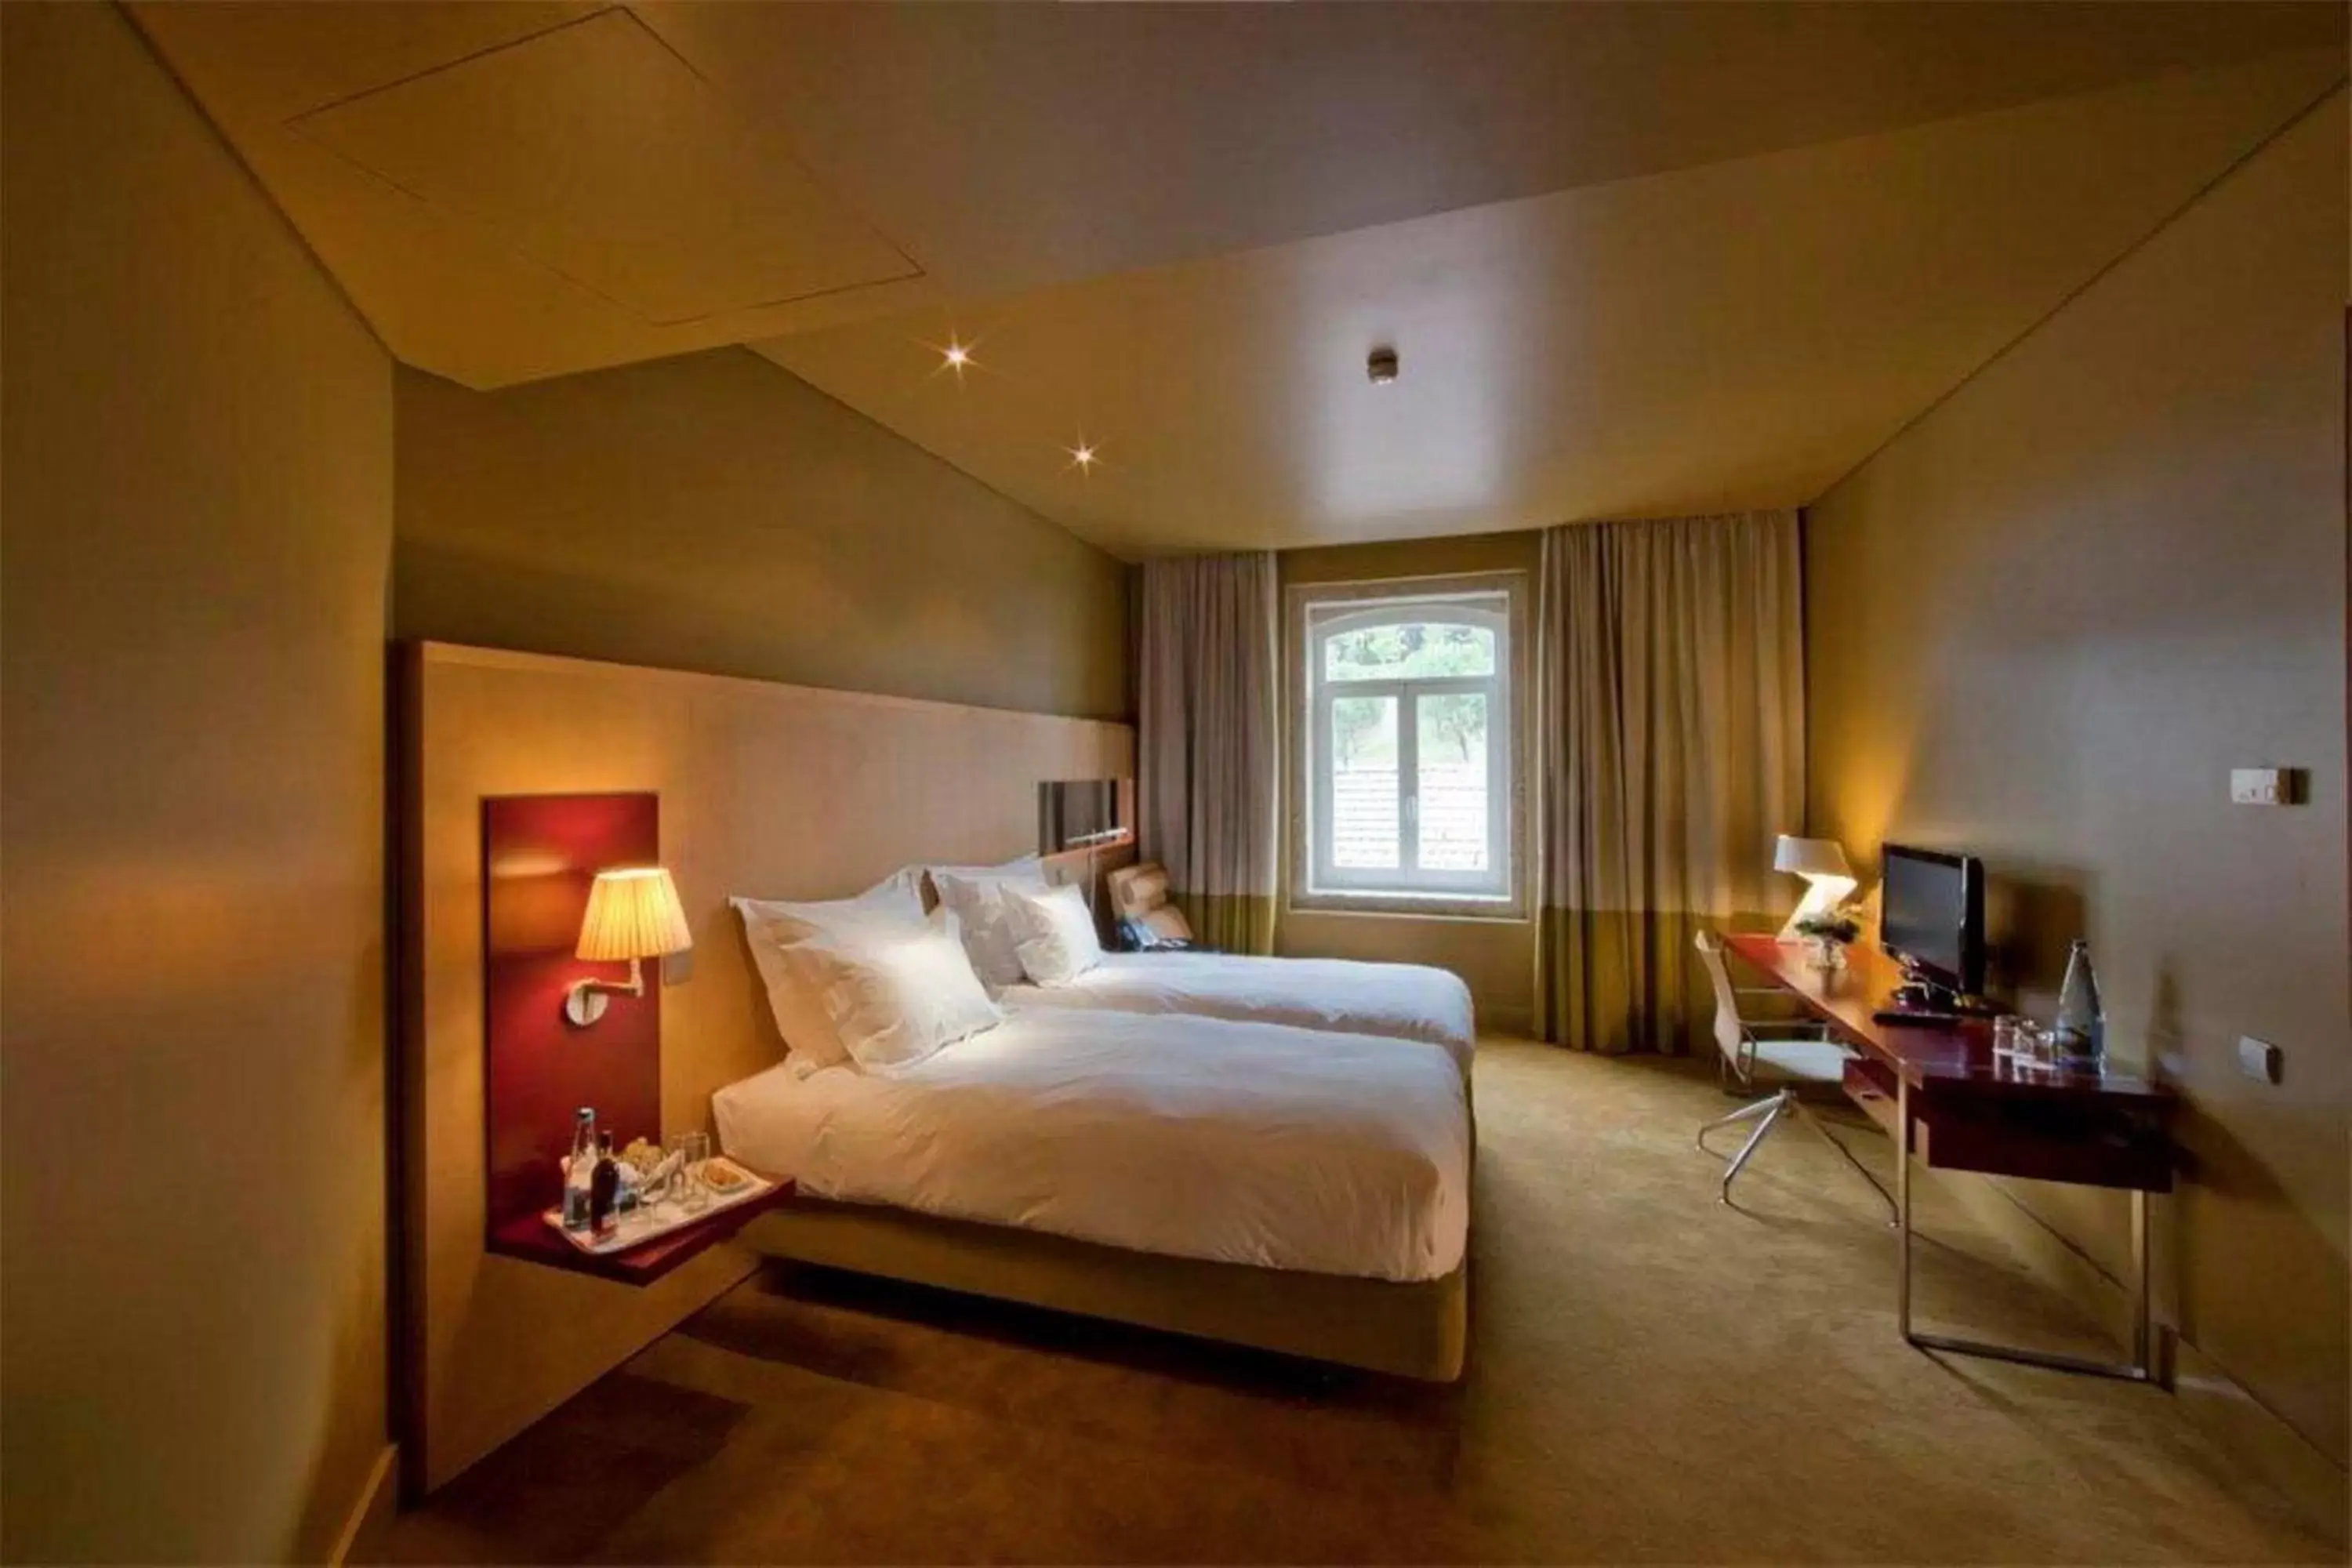 Photo of the whole room in Pestana Palacio do Freixo, Pousada & National Monument - The Leading Hotels of the World